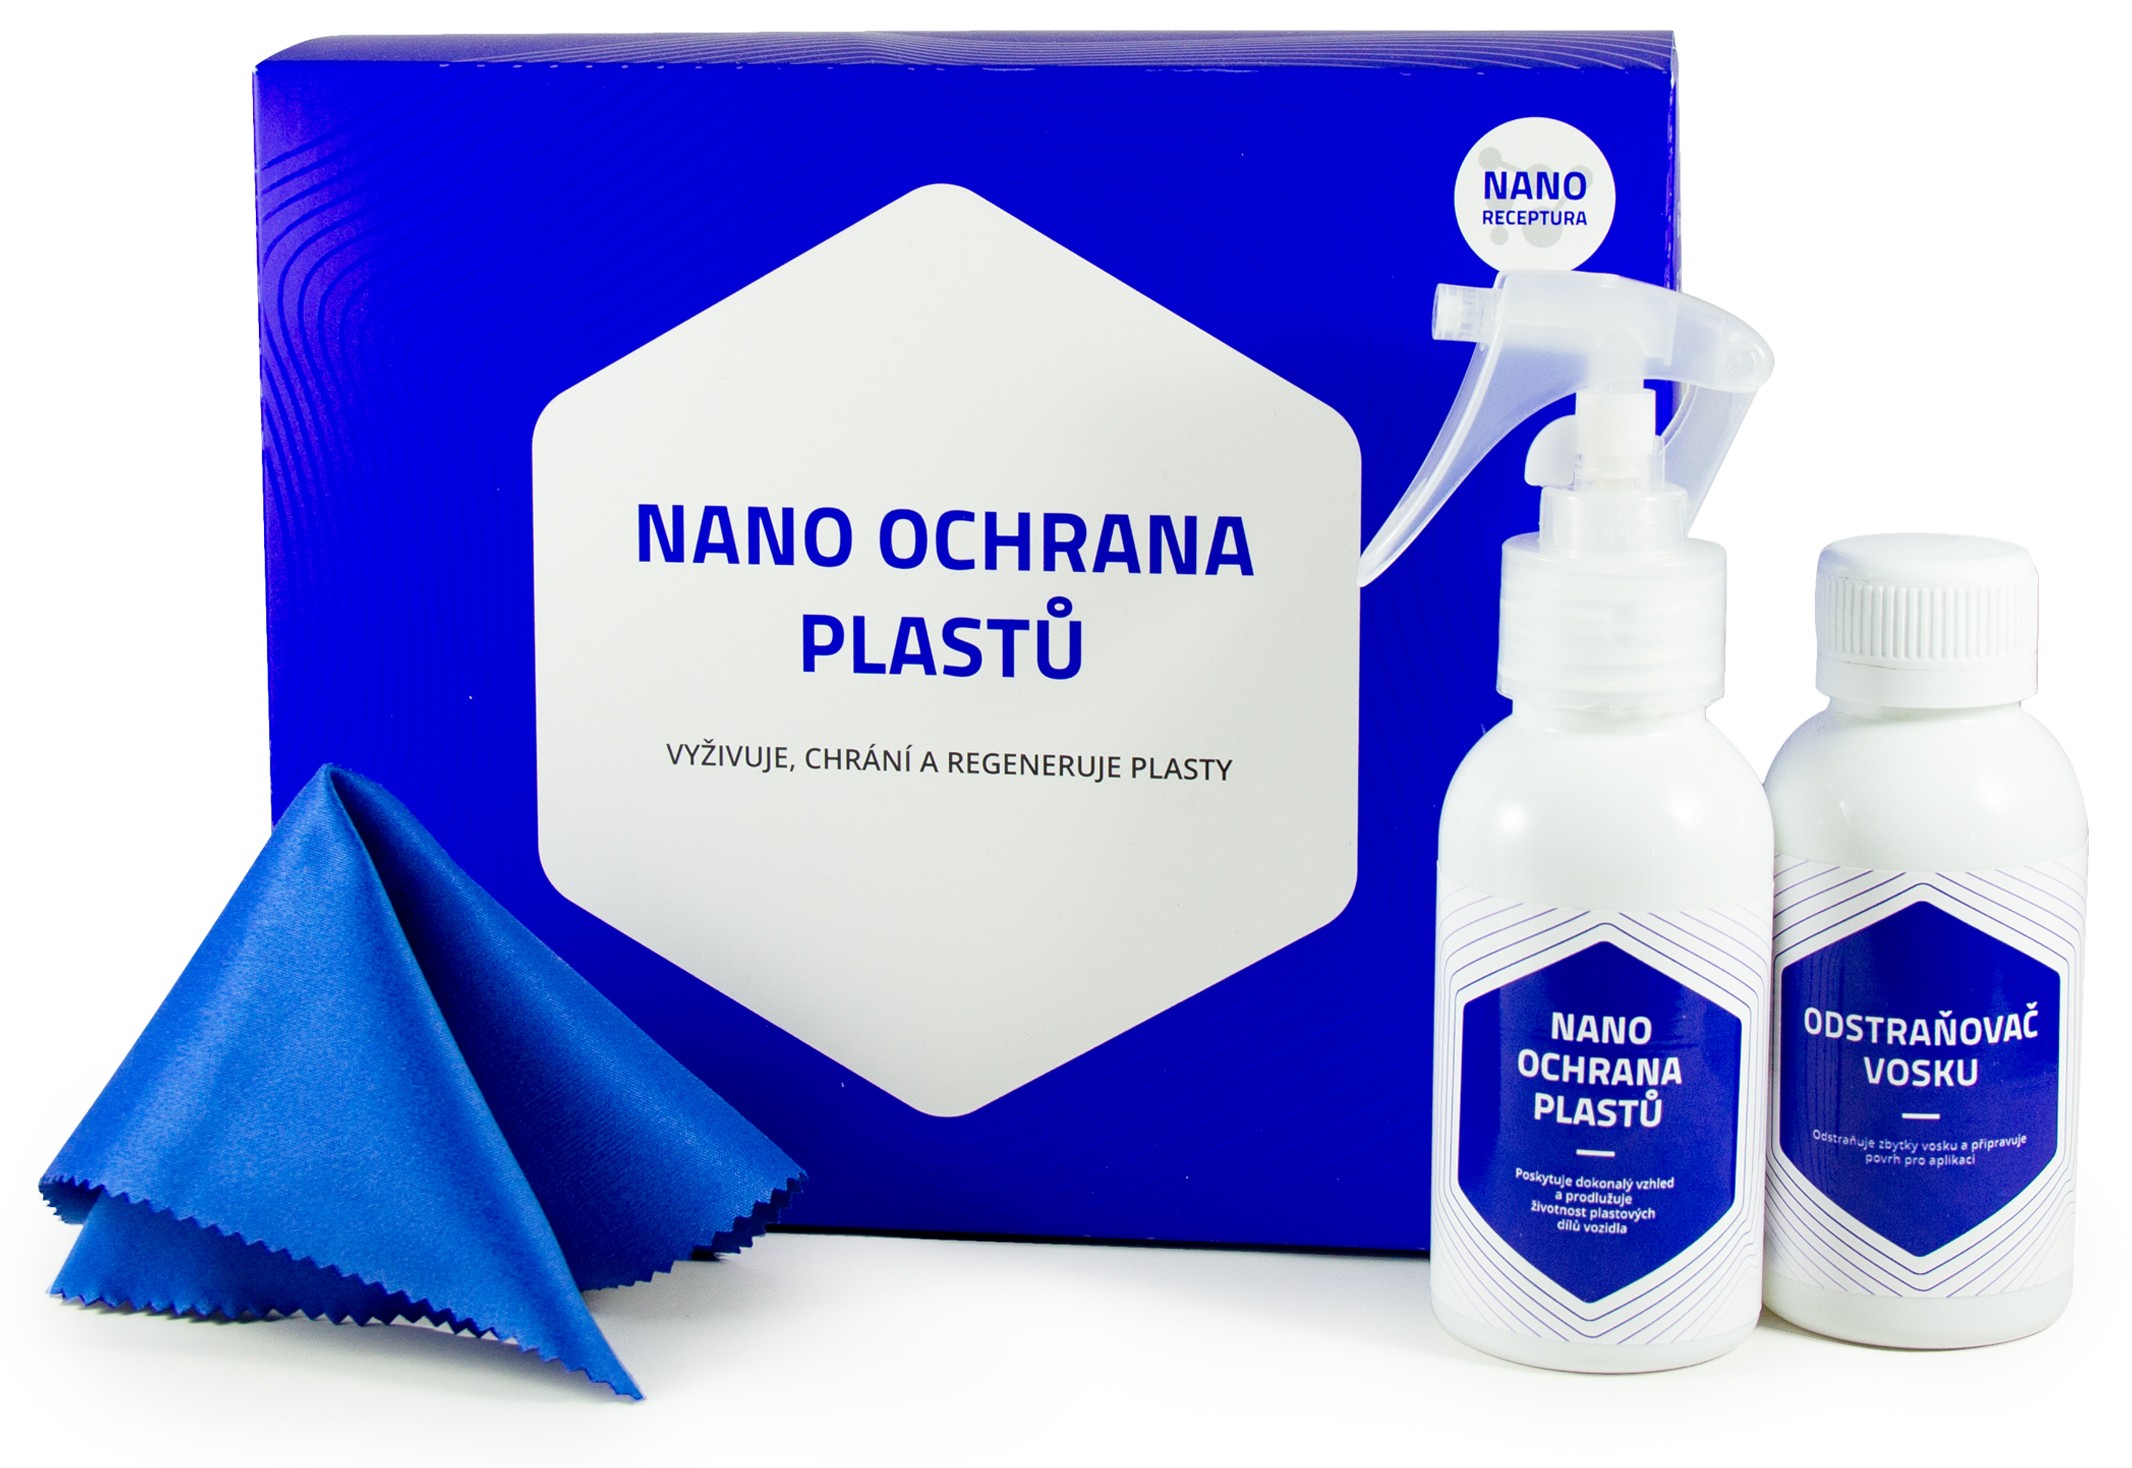 Nano ochrana plastov